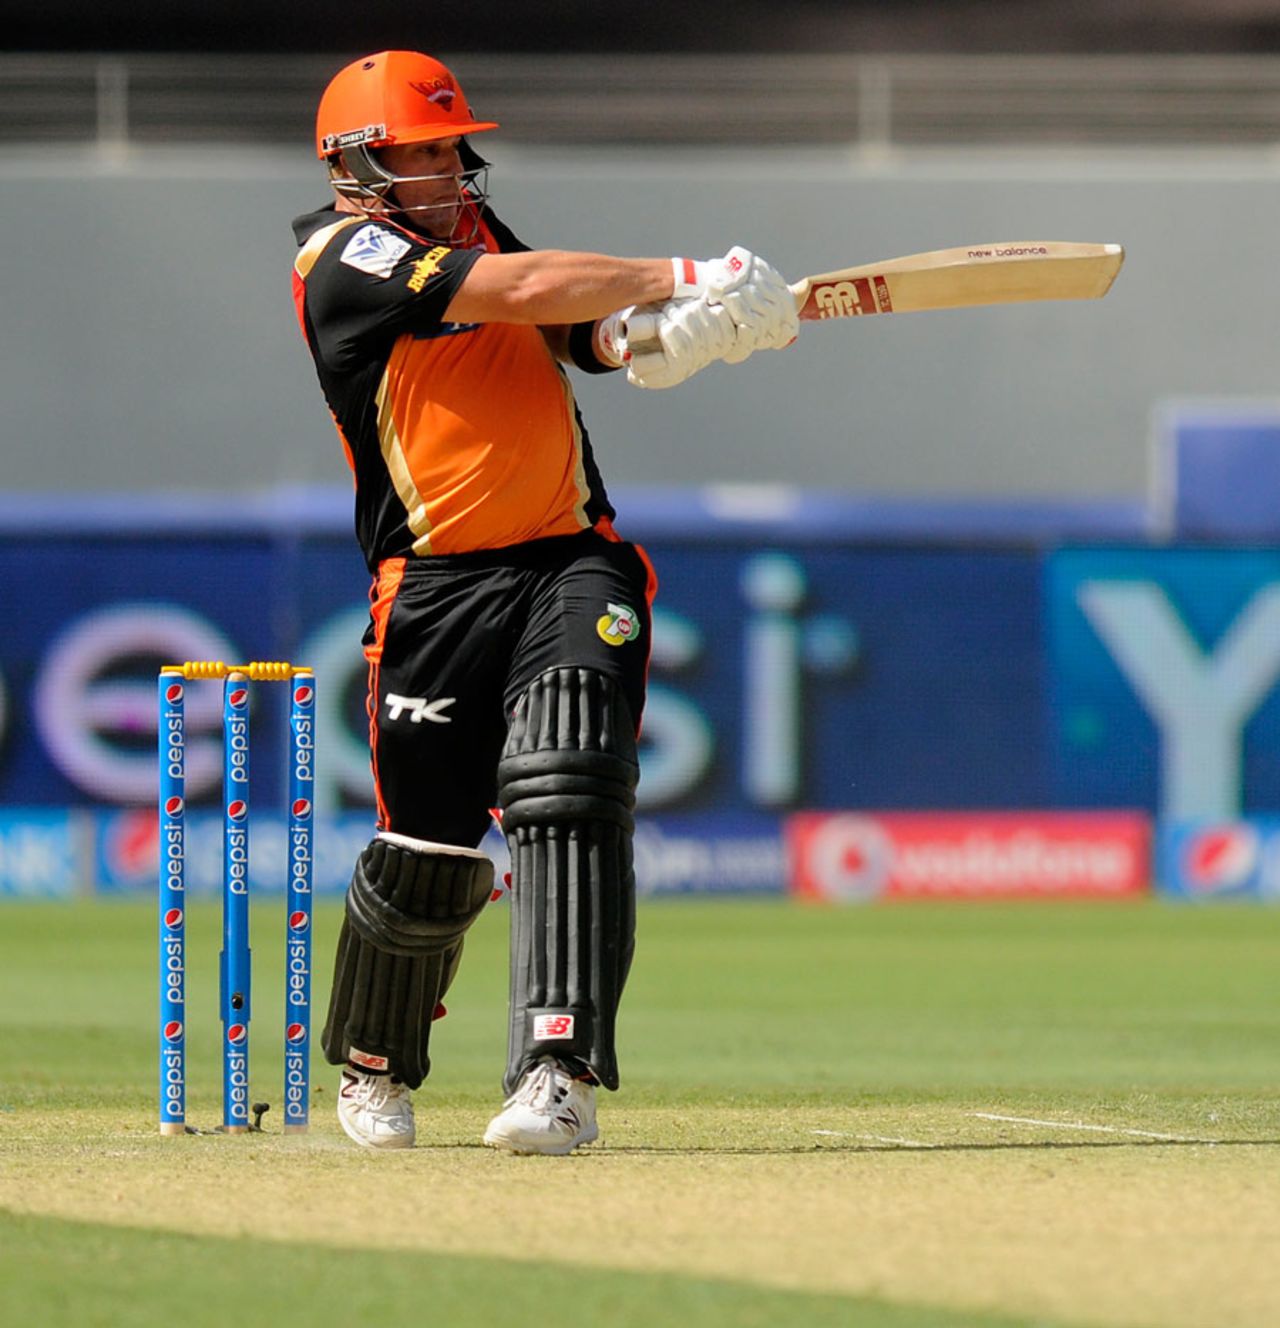 Aaron Finch pulls emphatically on his way to a 53-ball 88, Sunrisers Hyderabad v Delhi Daredevils, IPL 2014, Dubai, April 25, 2014